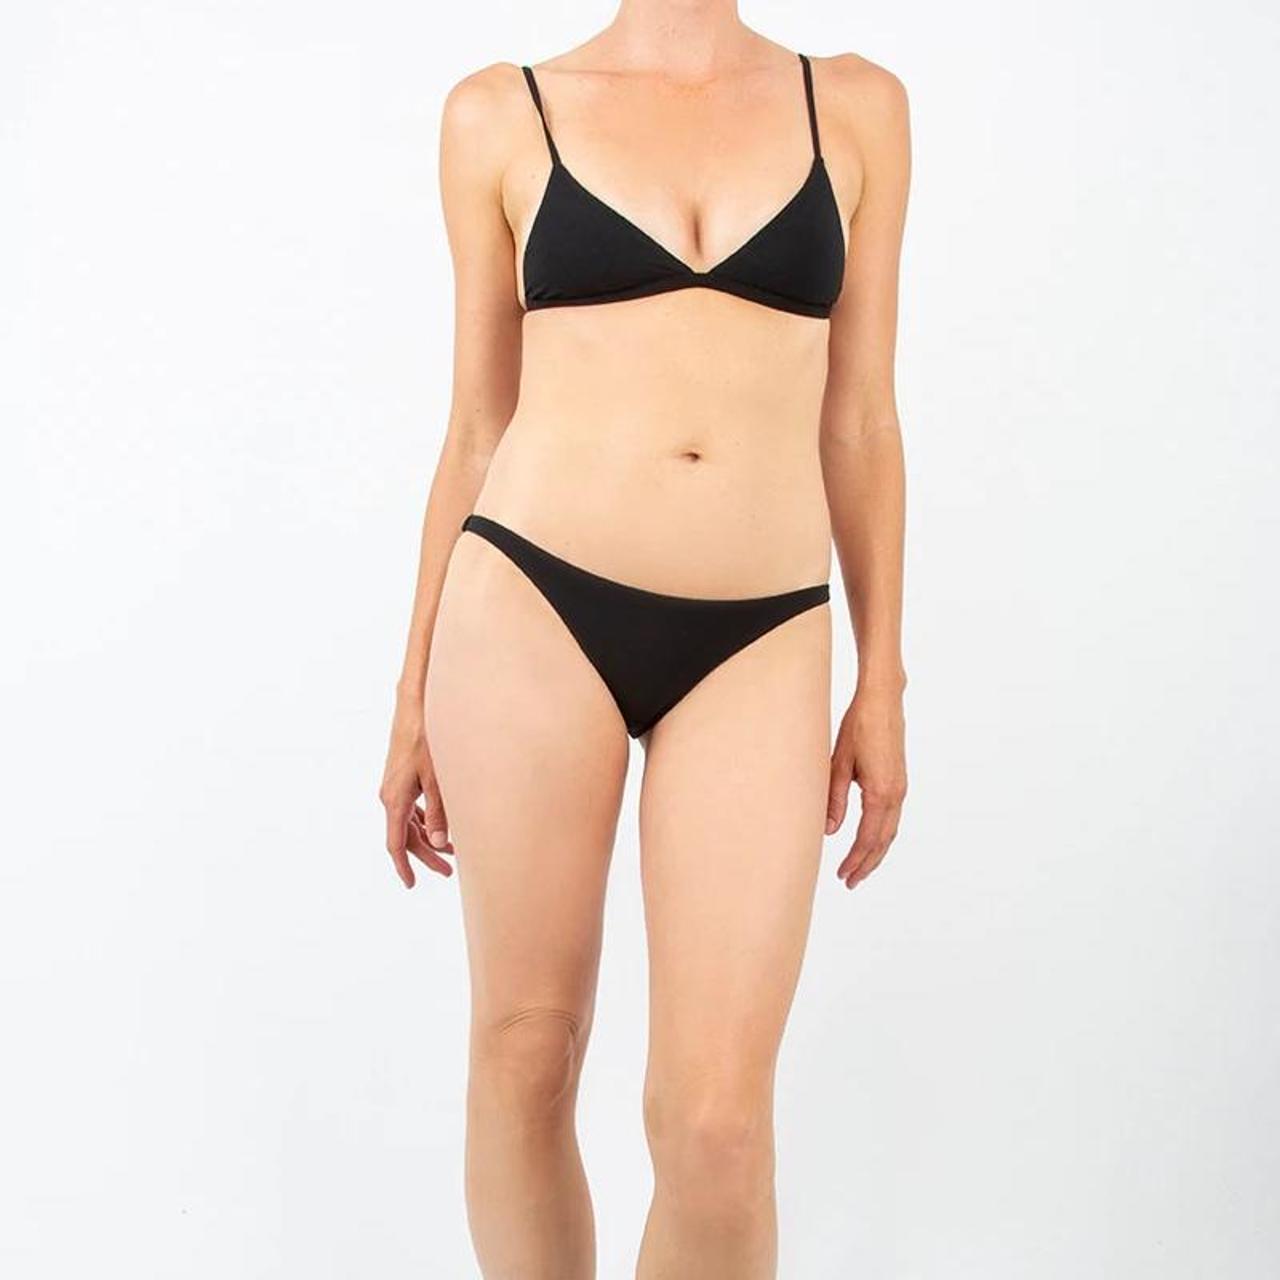 Product Image 3 - Anemos Swim
The classic cheeky bikini